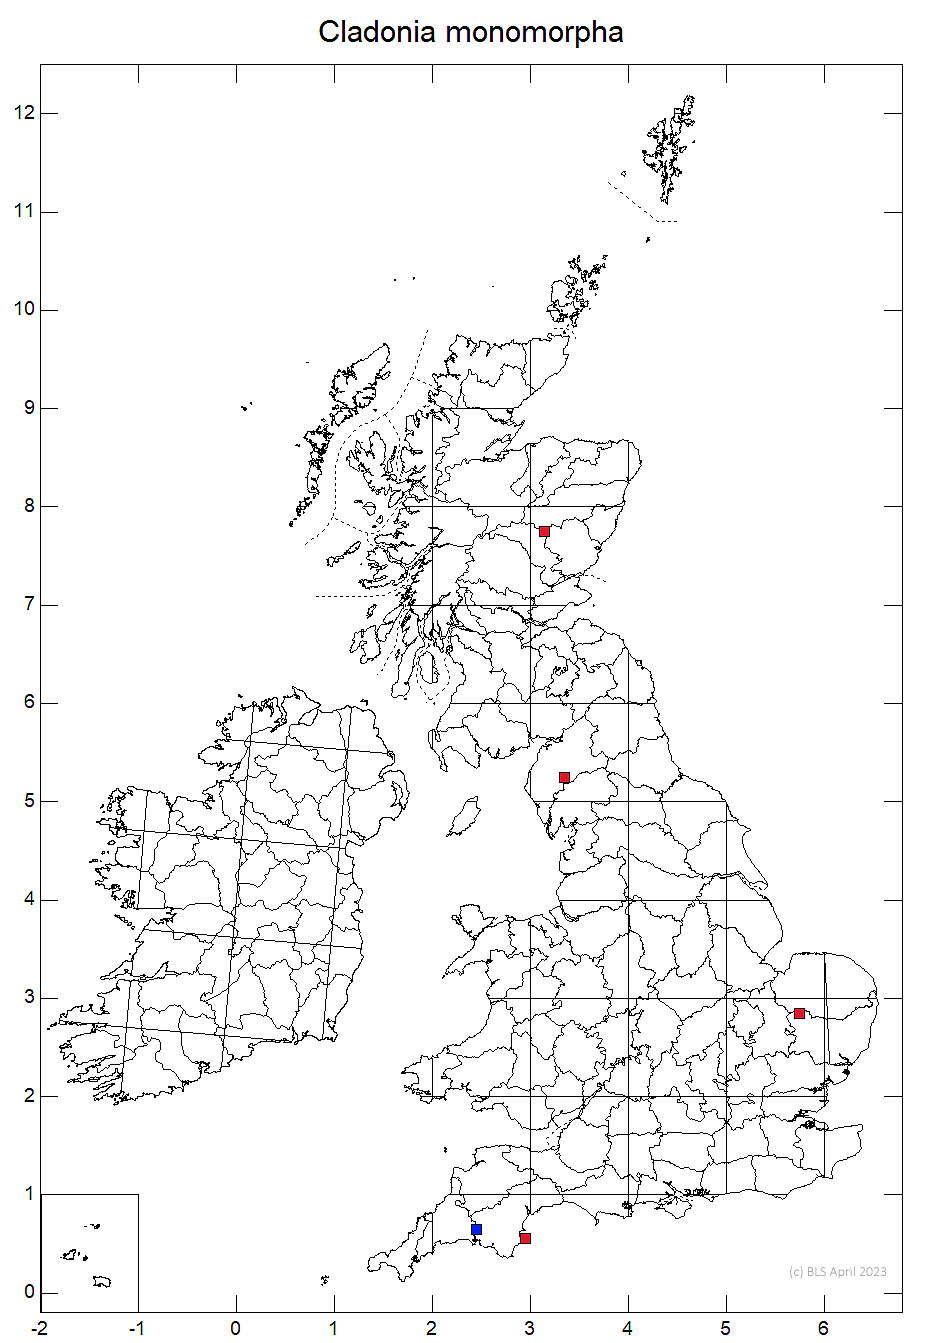 Cladonia monomorpha 10km sq distribution map